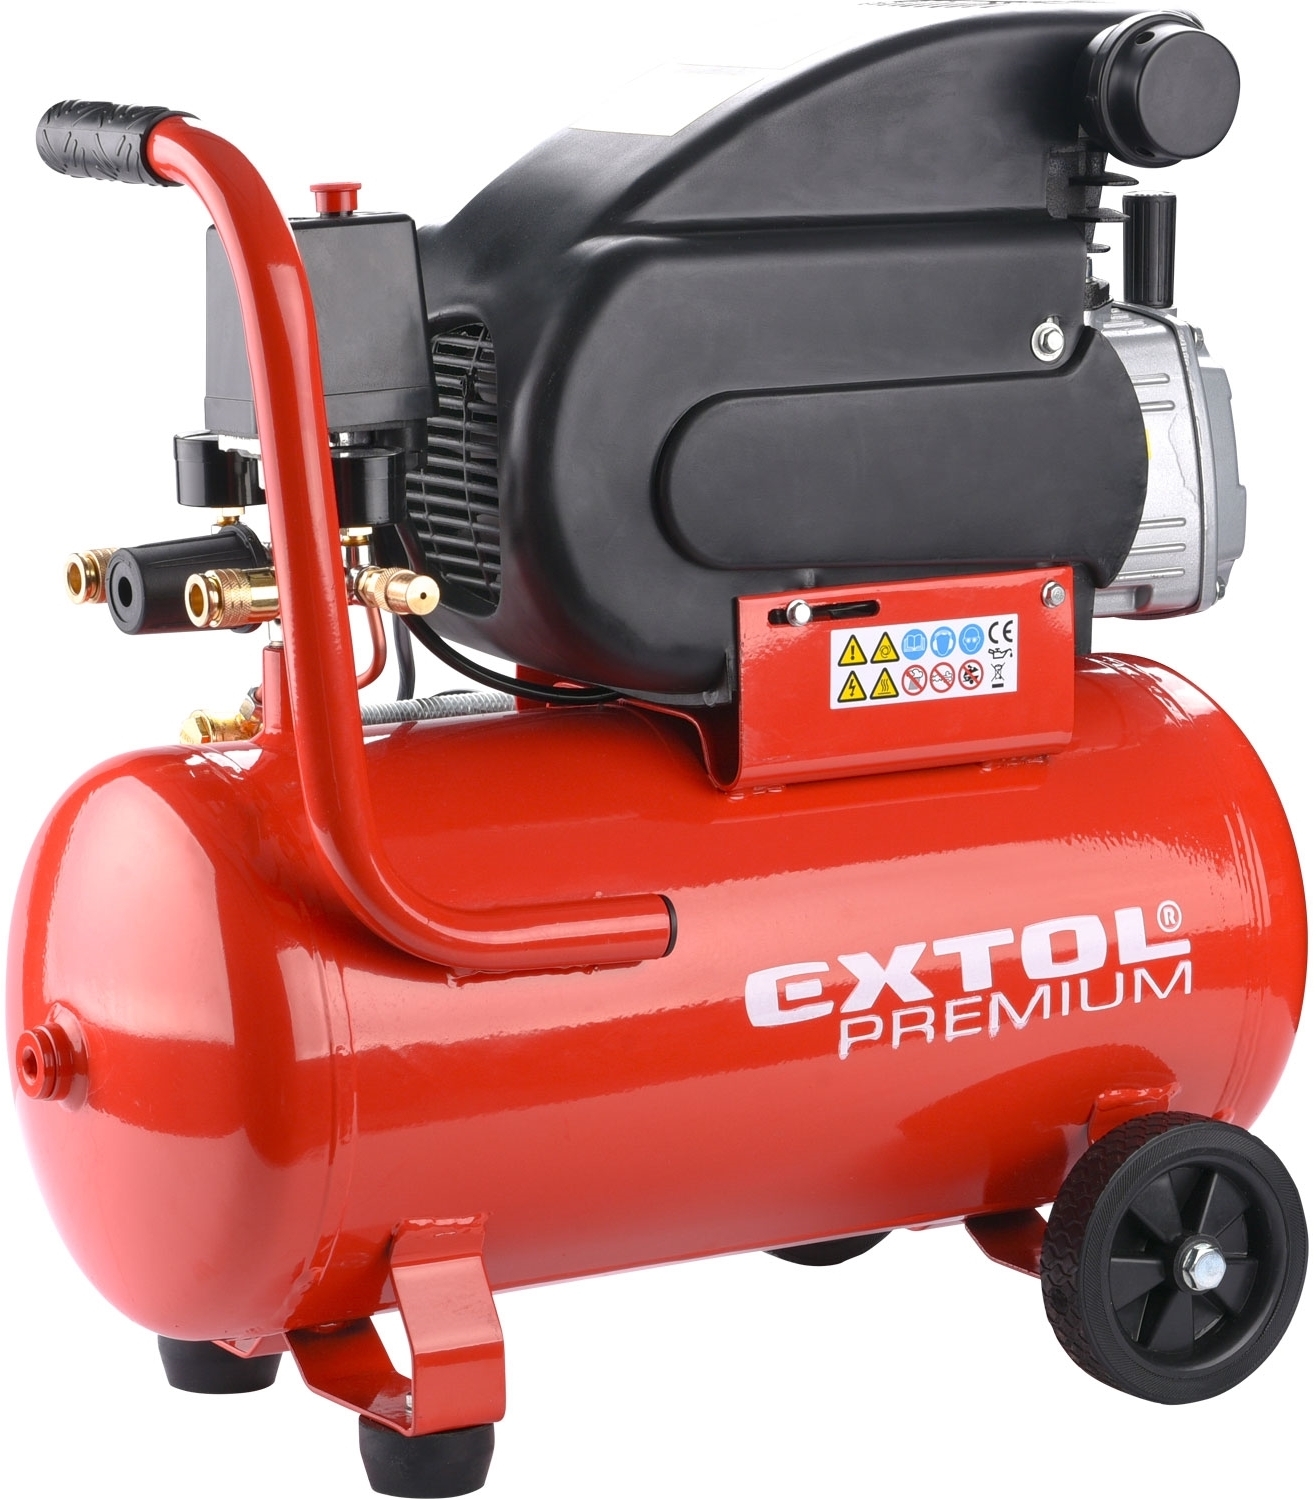 Kompresor Extol Premium 8895310 Extol